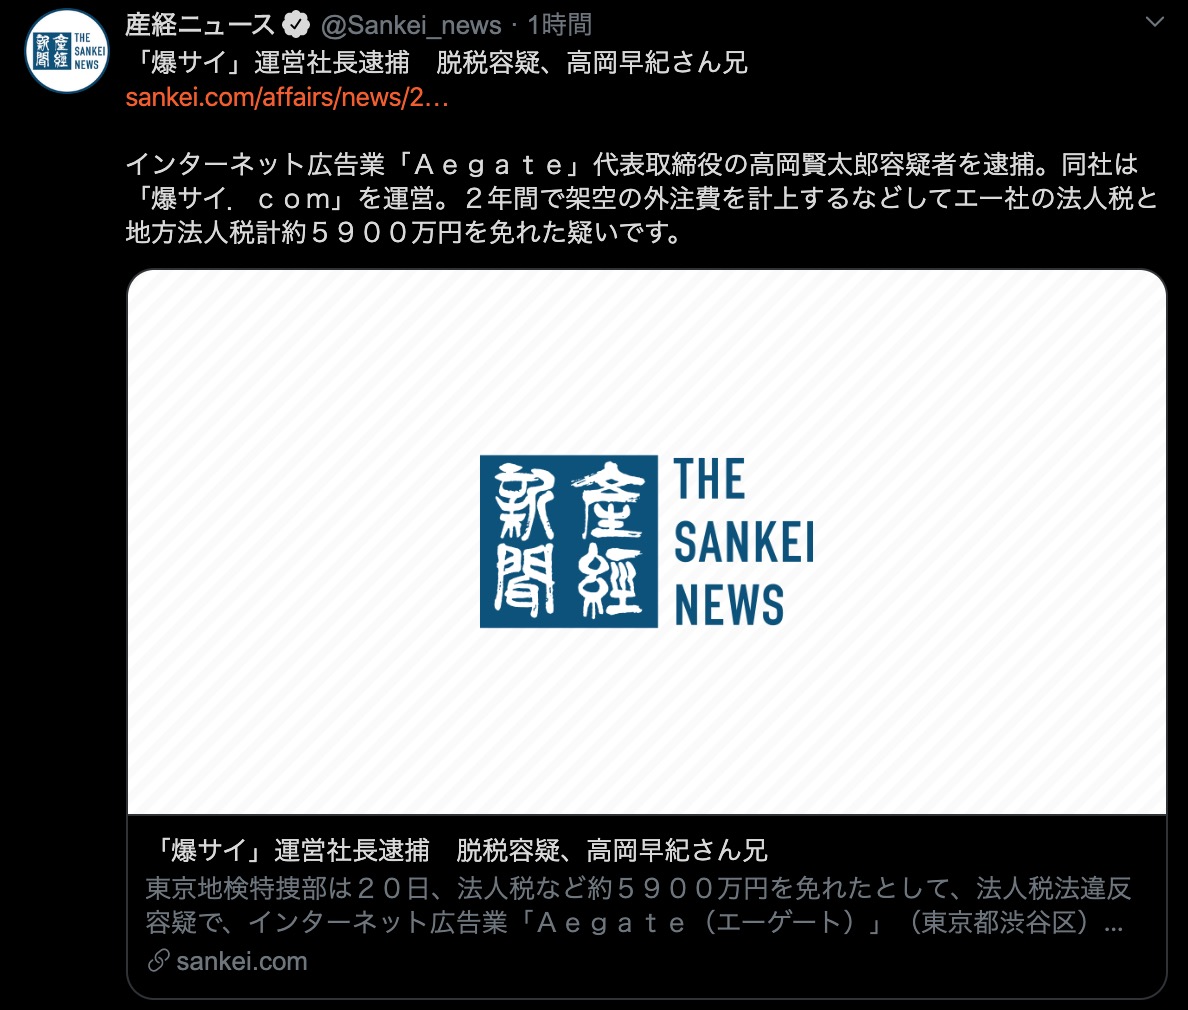 https://twitter.com/Sankei_news/status/1230315615178477568